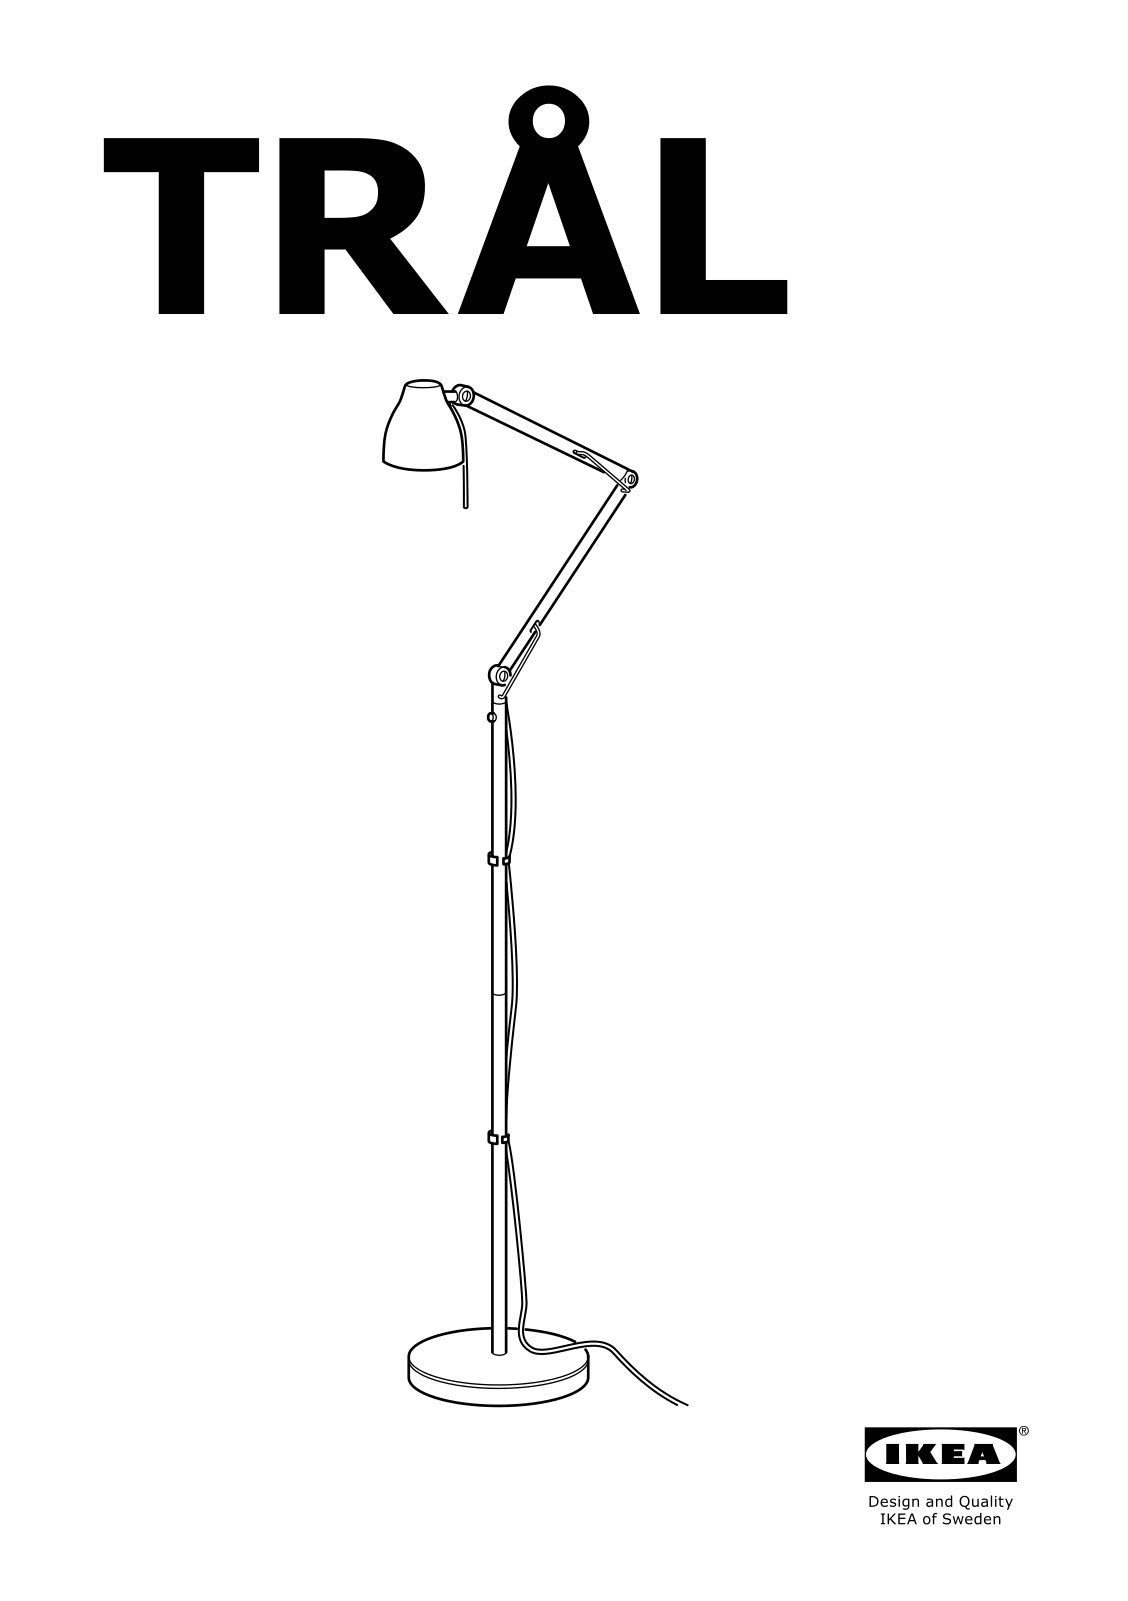 IKEA TRAL User Manual